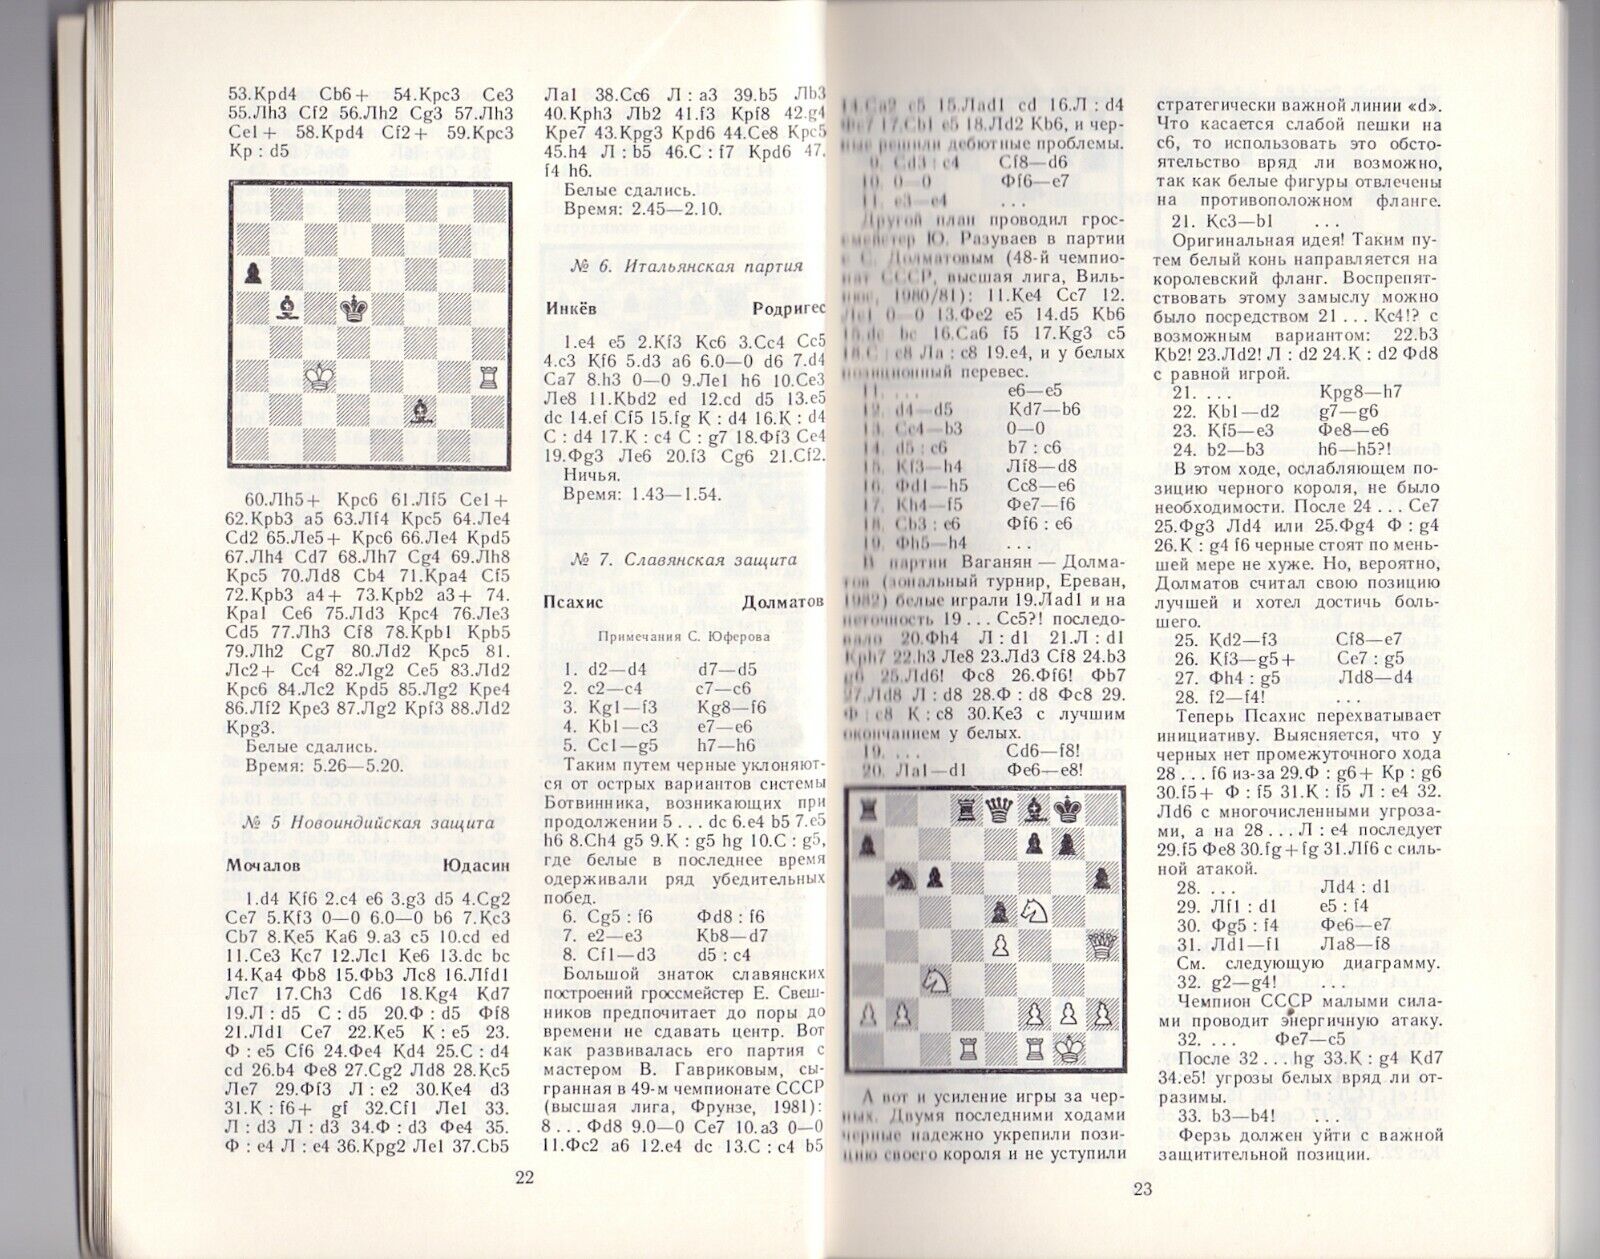 11639.Set of 2 Soviet chess books On International Tournaments by Kupreychik Marusenko